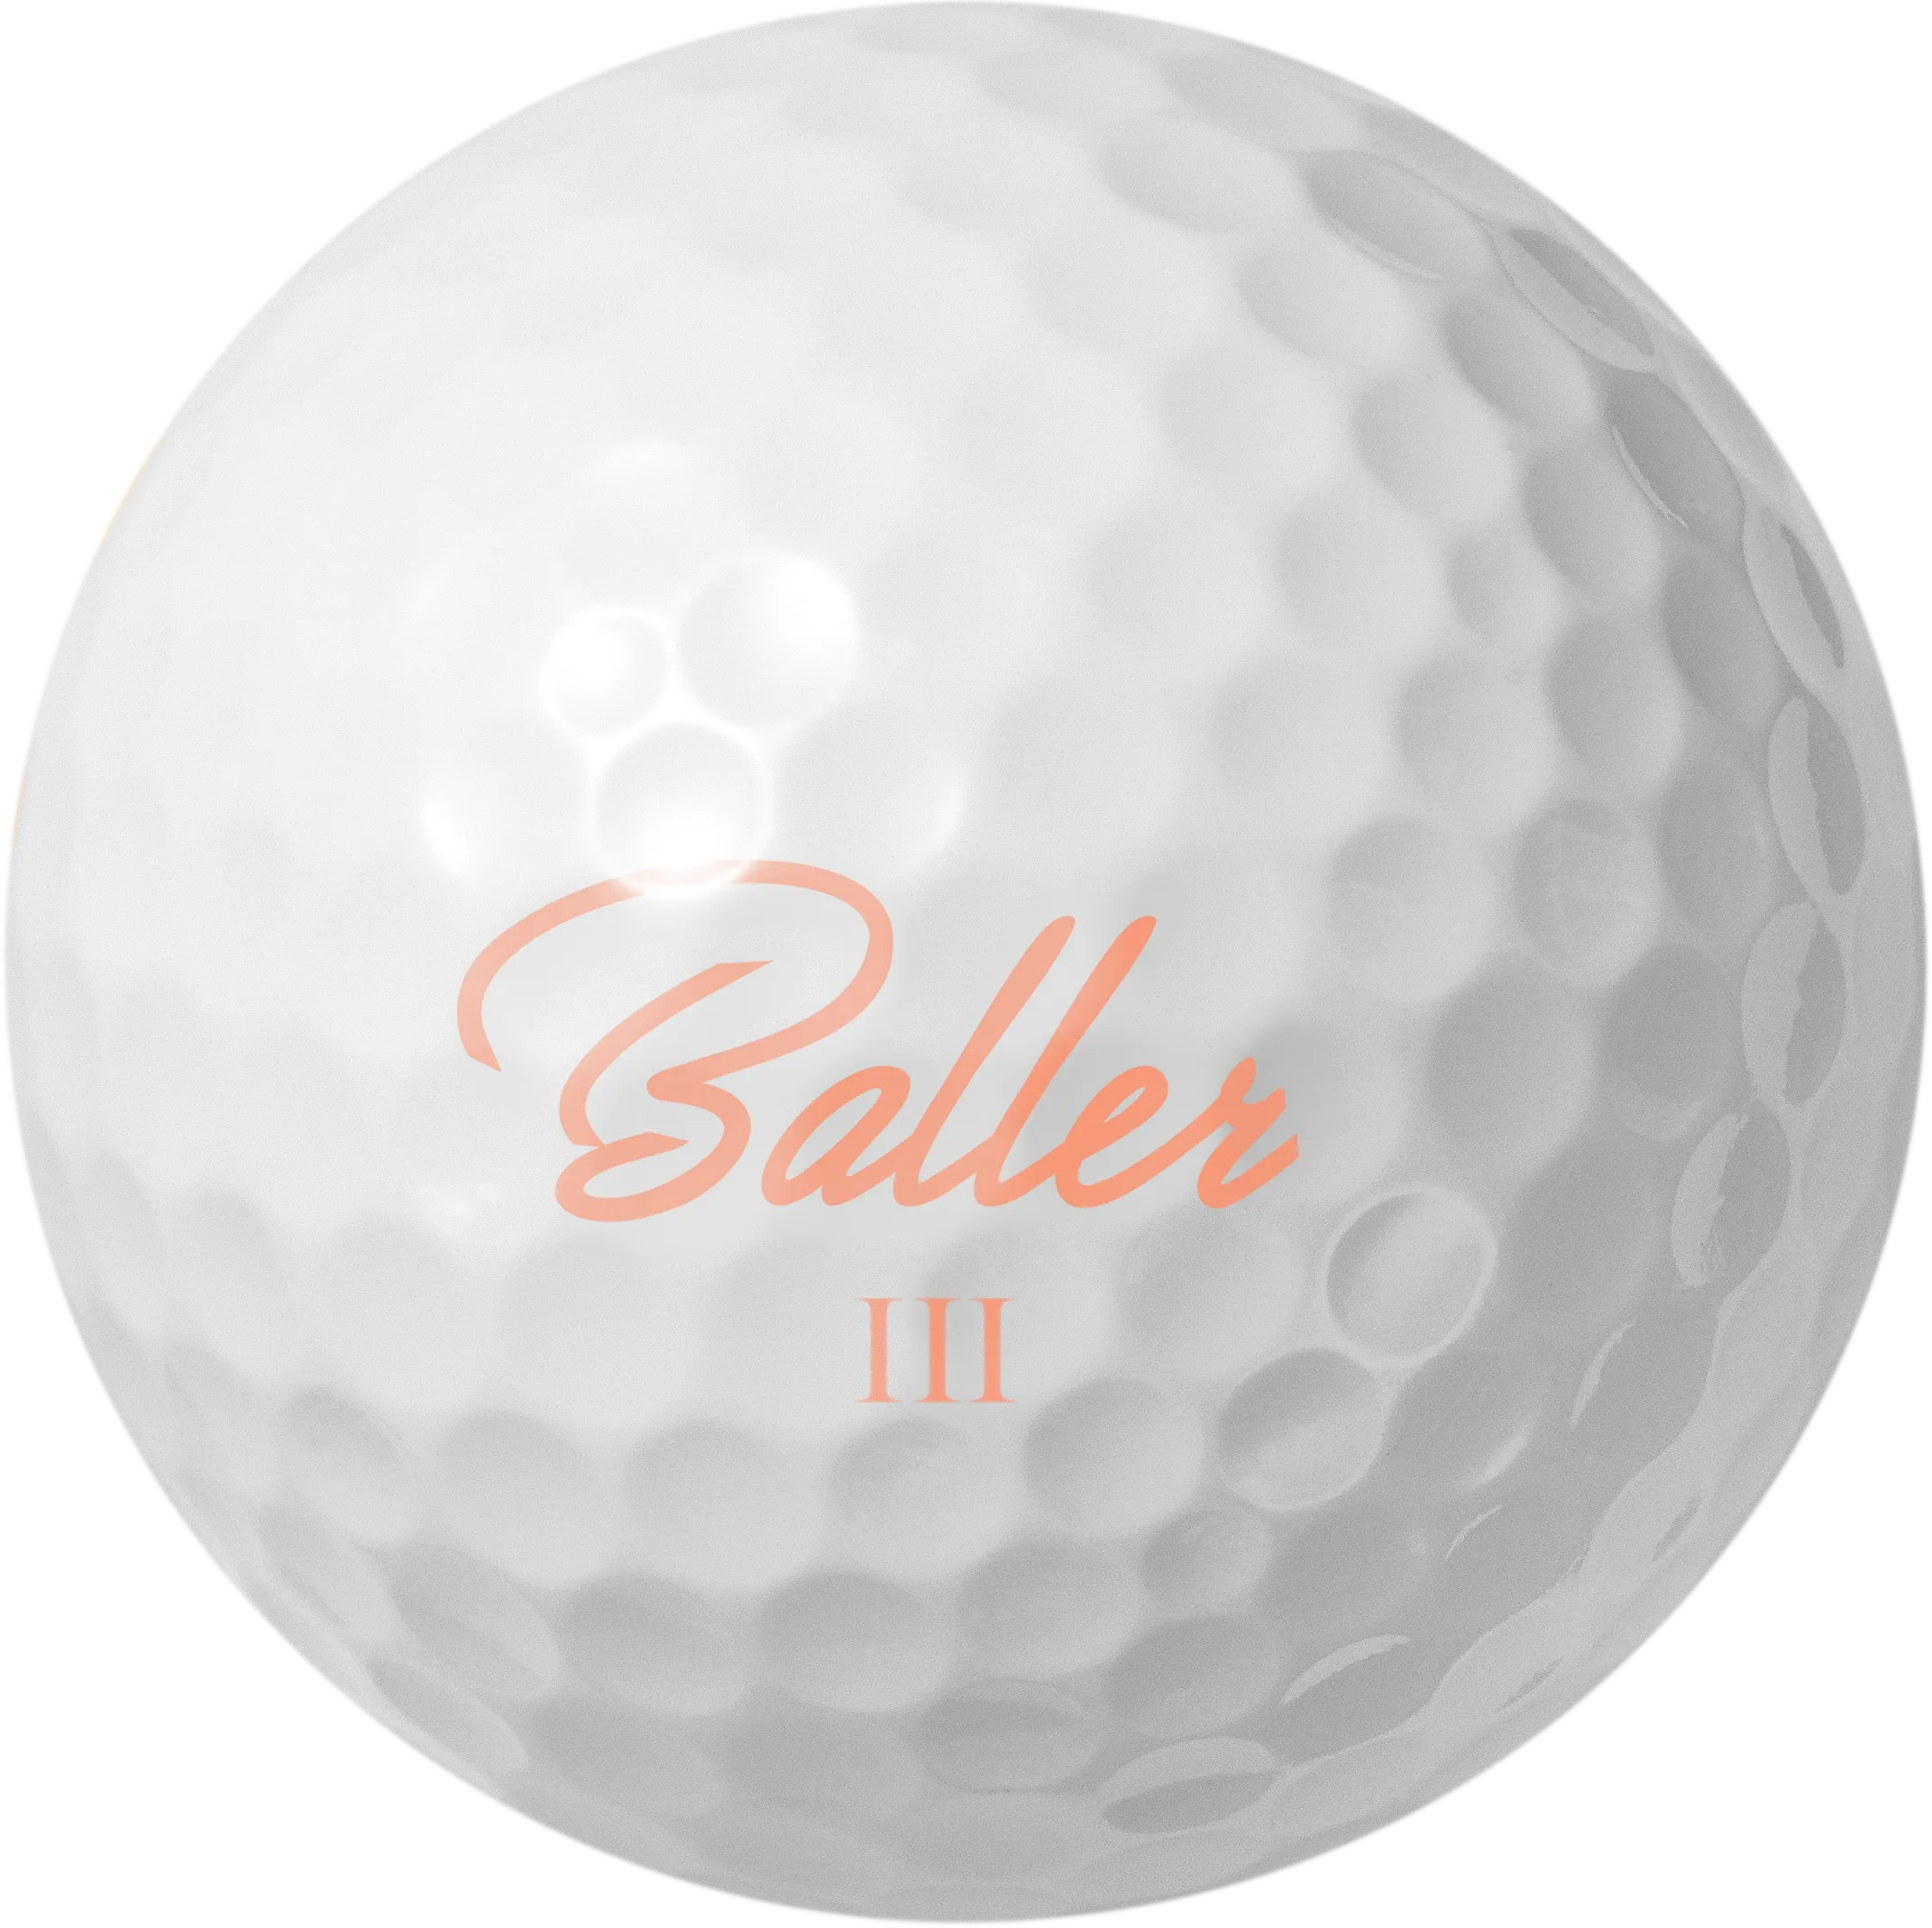 Baller CREW Golfbälle, Print Edition Orange